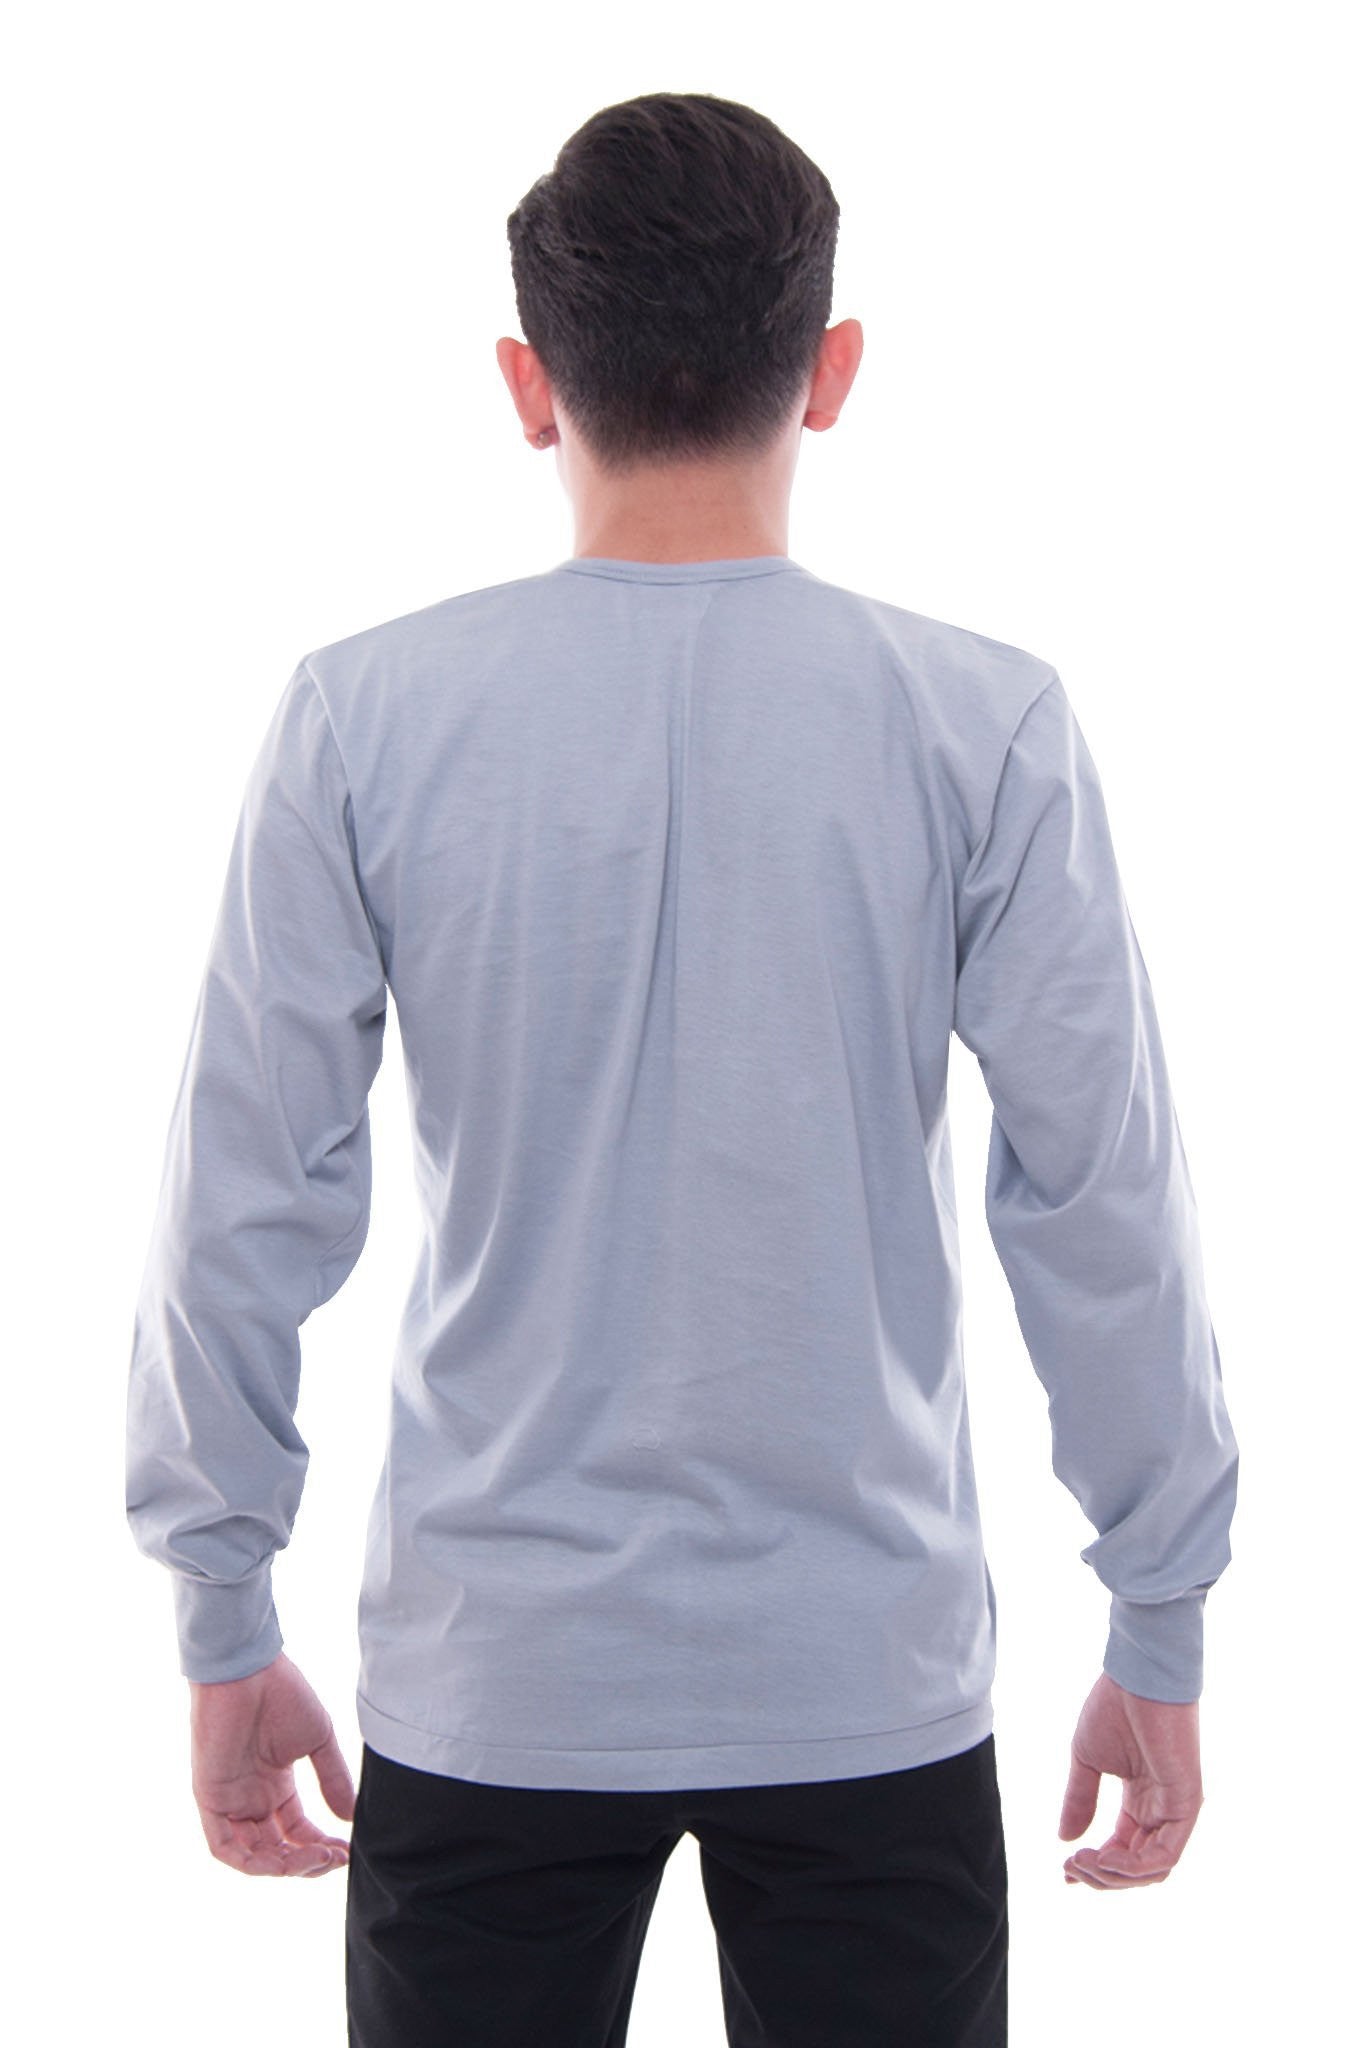 MUL7 - Camisa de Chino - Long-Sleeve - Gray